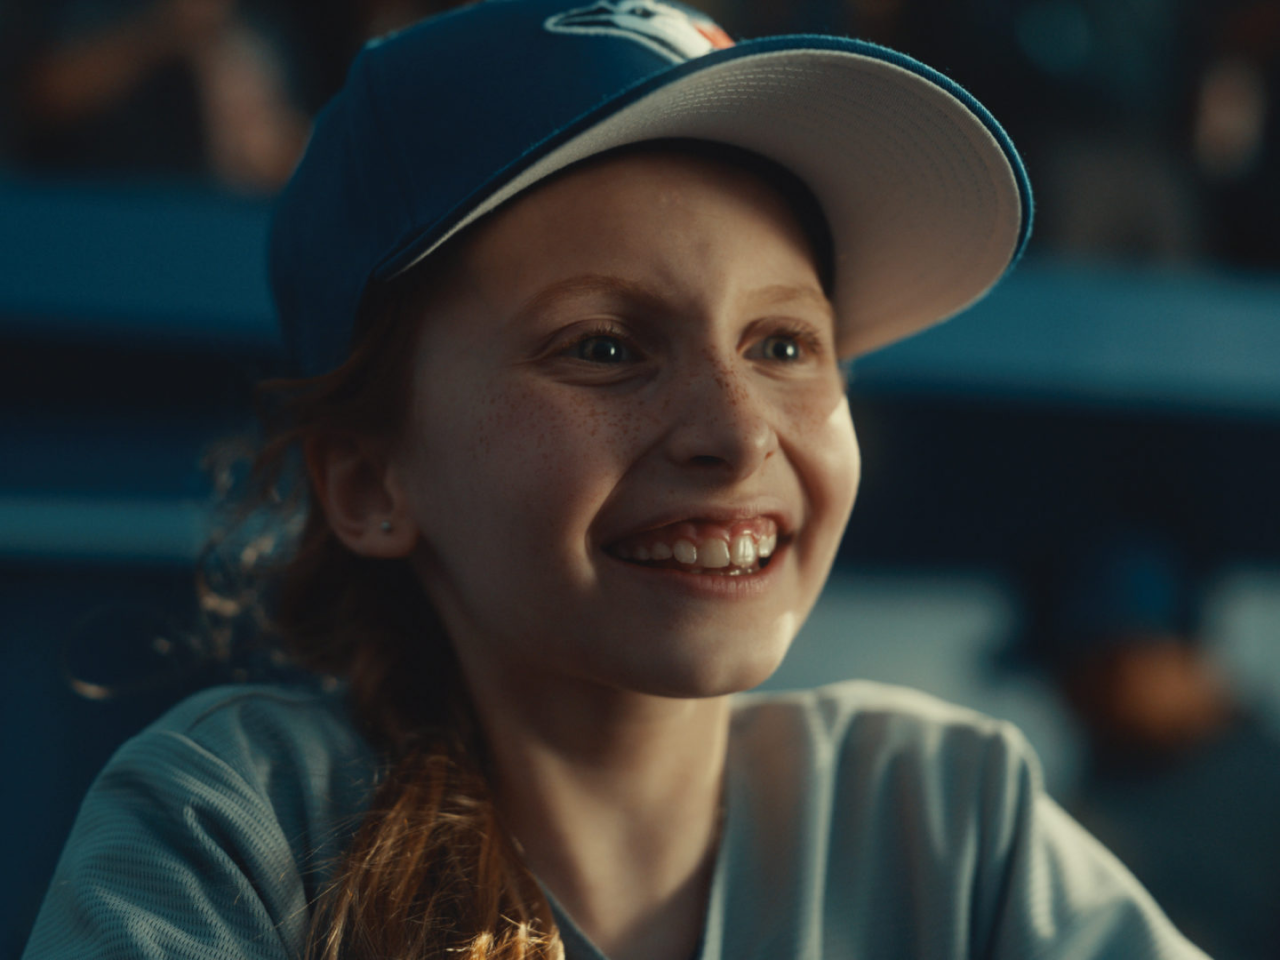 Happy child wearing Toronto Blue Jays hat at baseball game